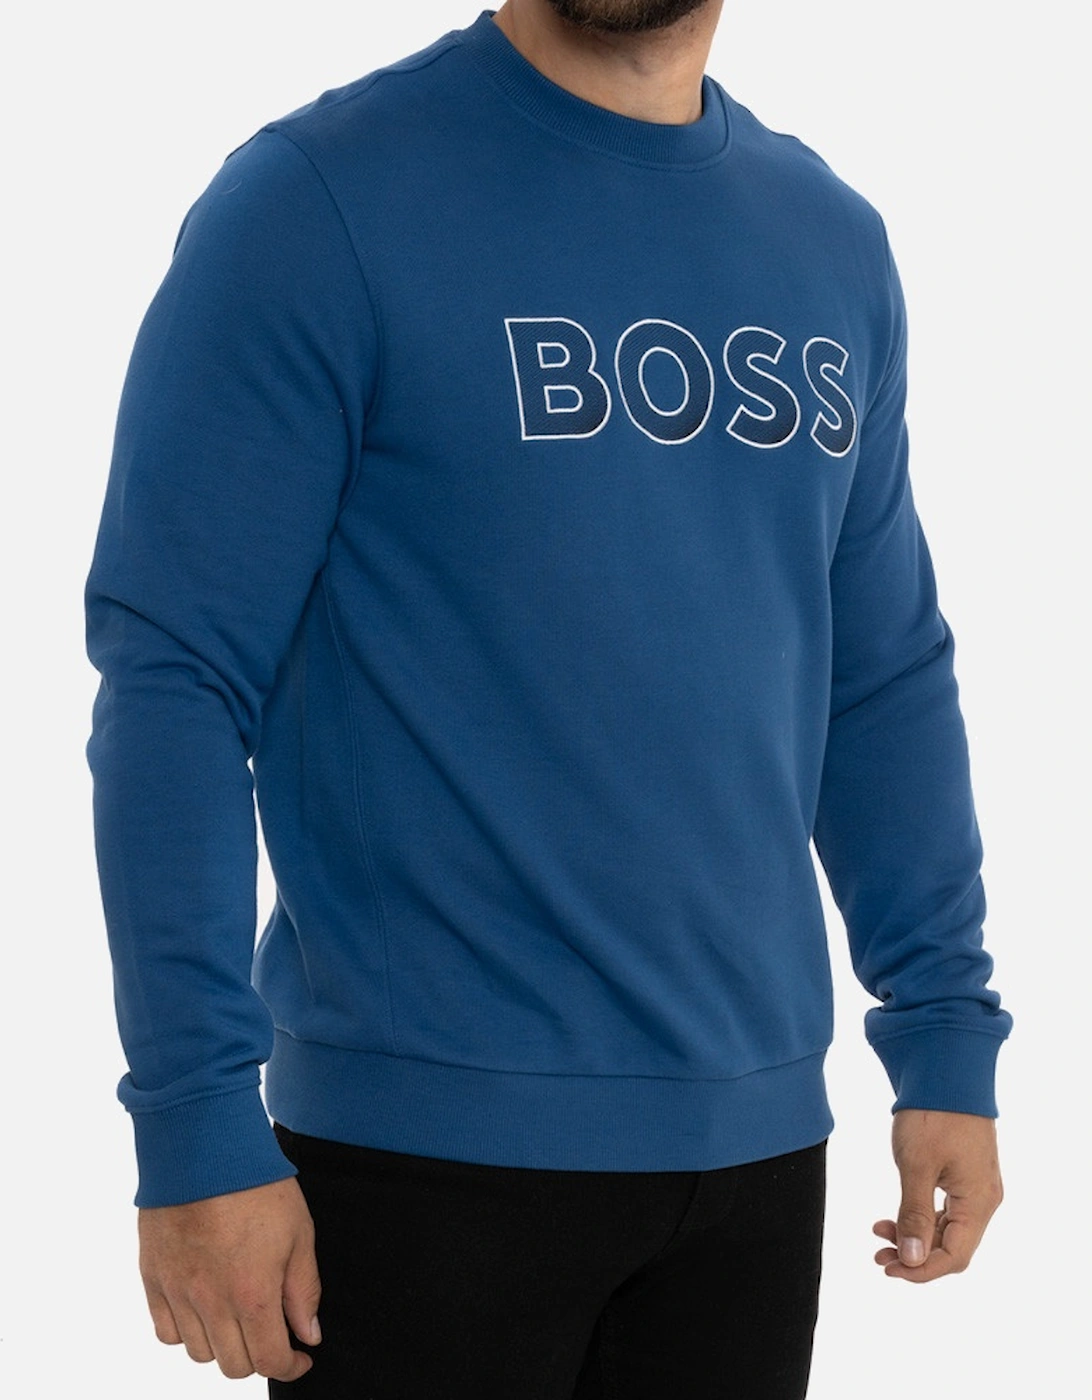 Mens Salbo Iconic Crew Sweatshirt (Royal Blue)